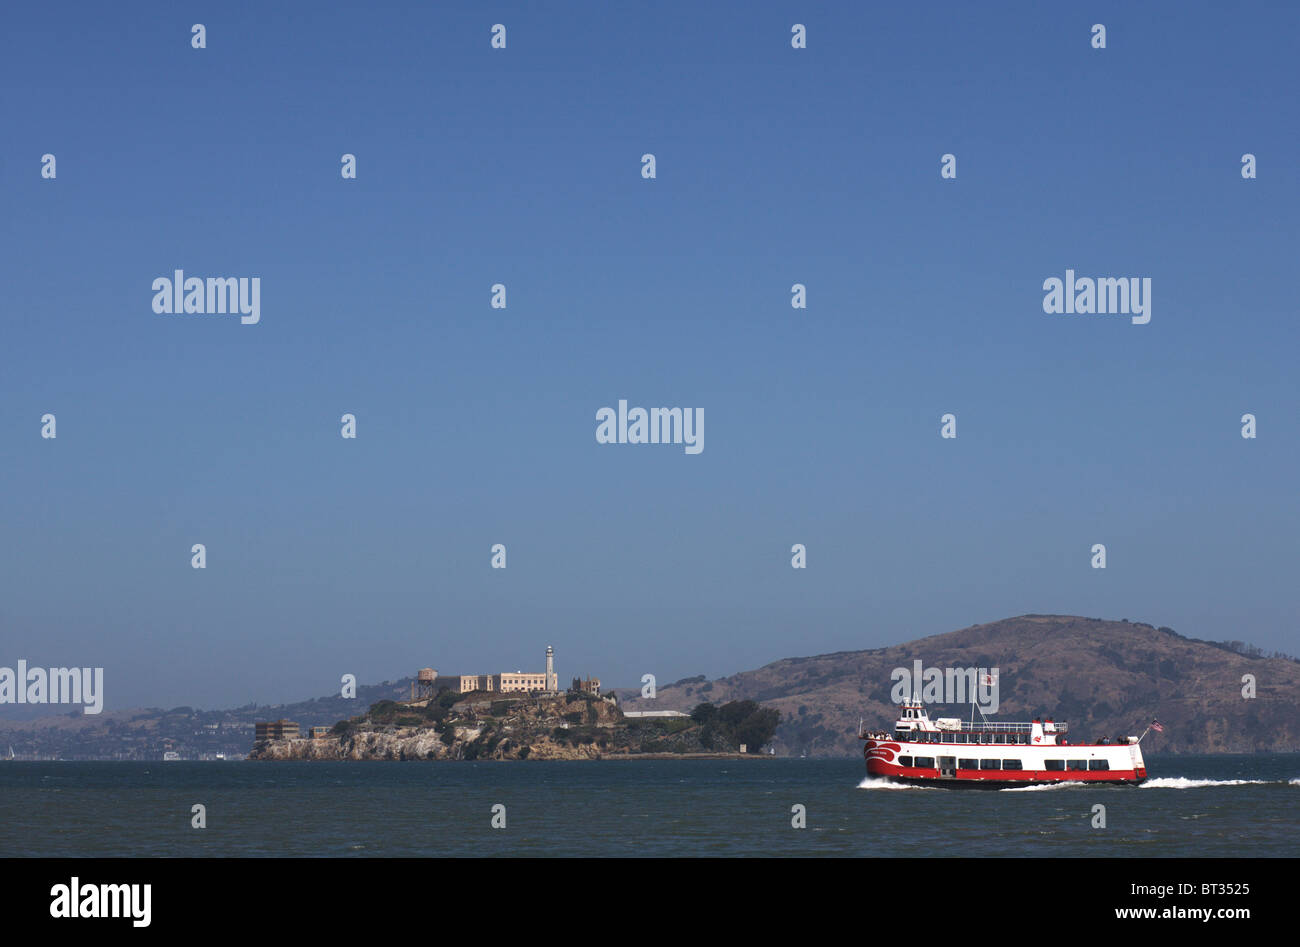 Alcatraz Island in San Francisco Bay in California, United States Stock Photo